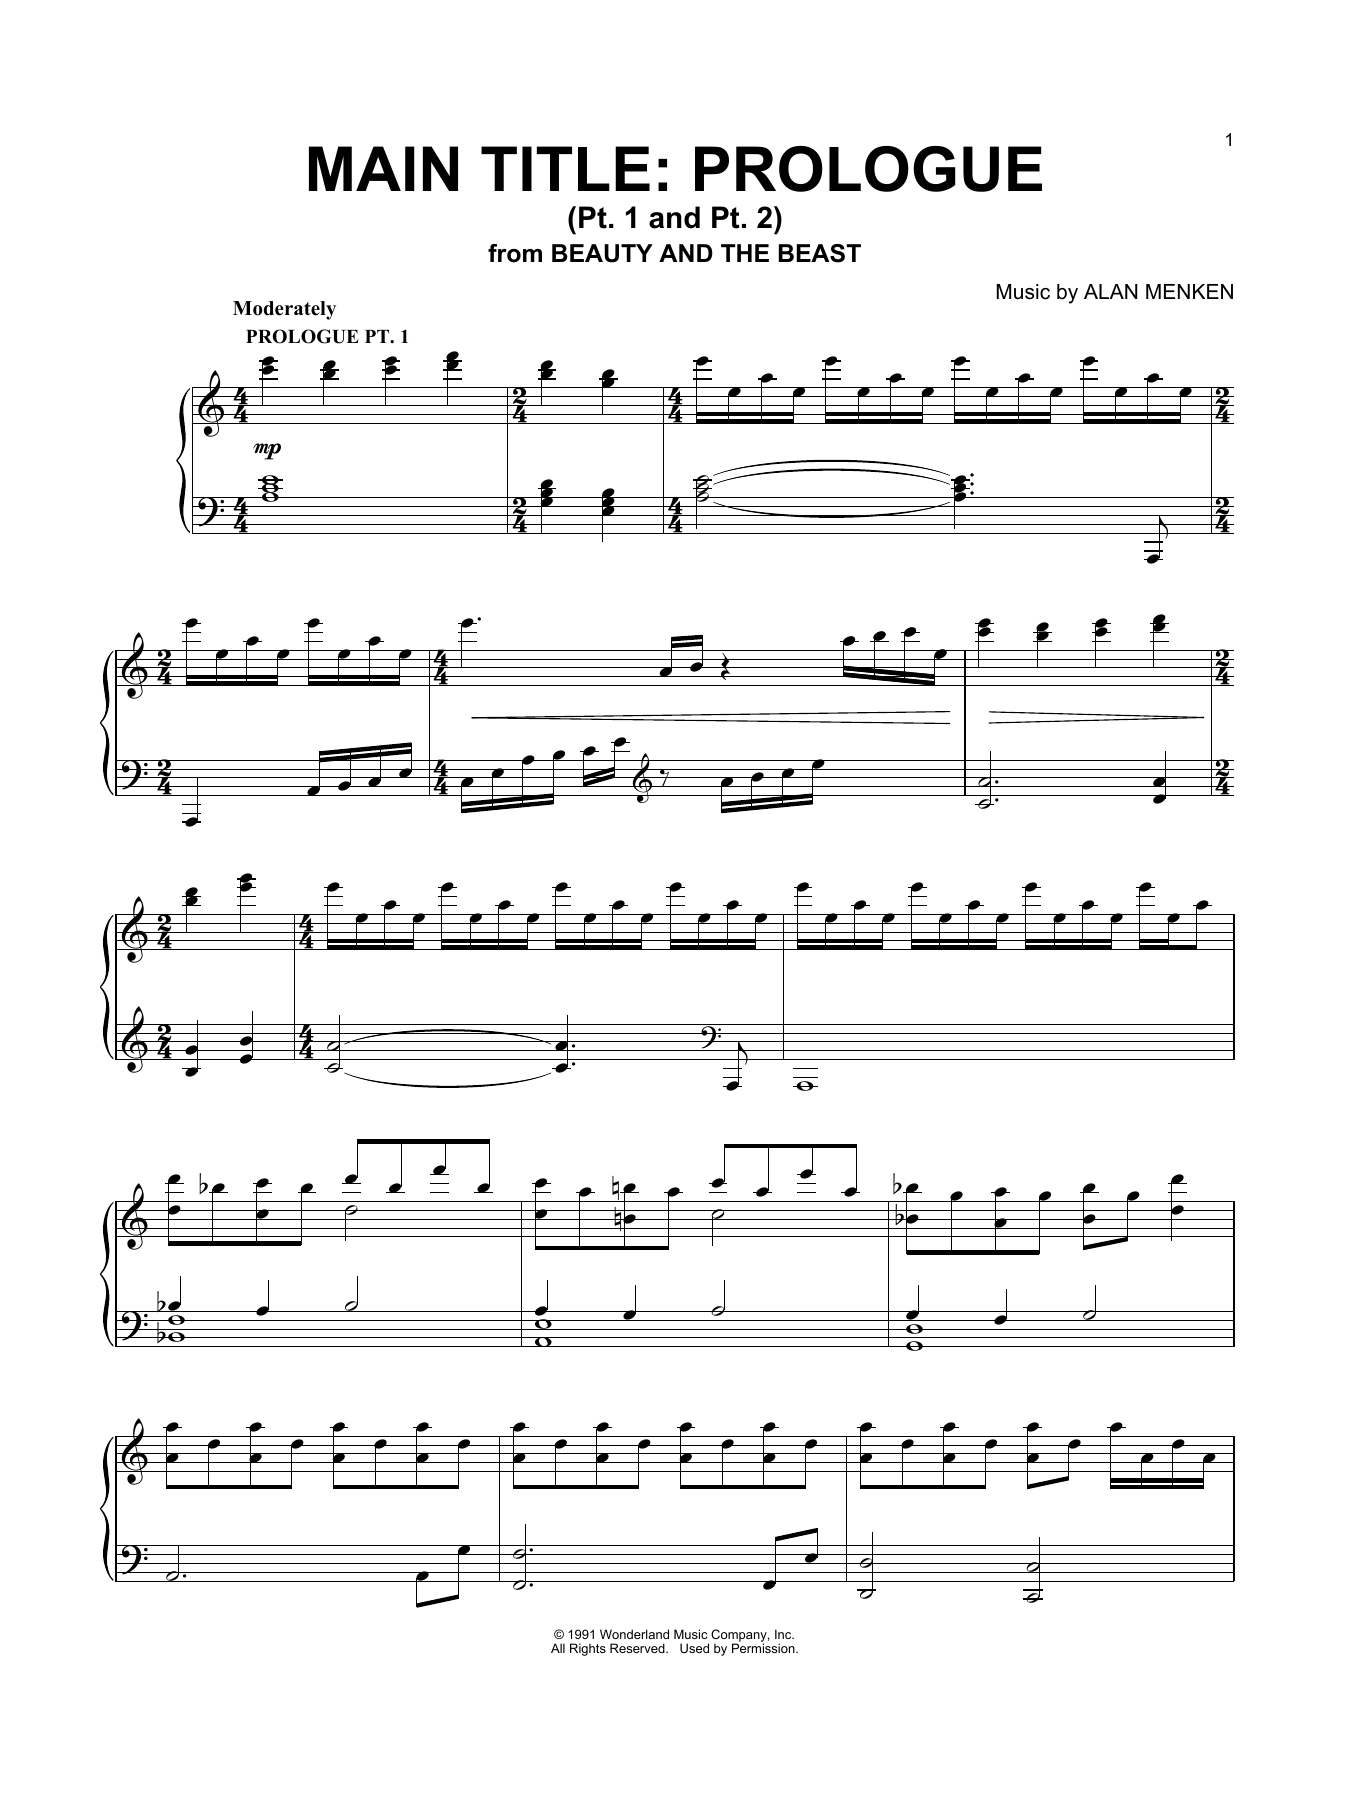 Alan Menken Main Title: Prologue Sheet Music Notes & Chords for Piano - Download or Print PDF